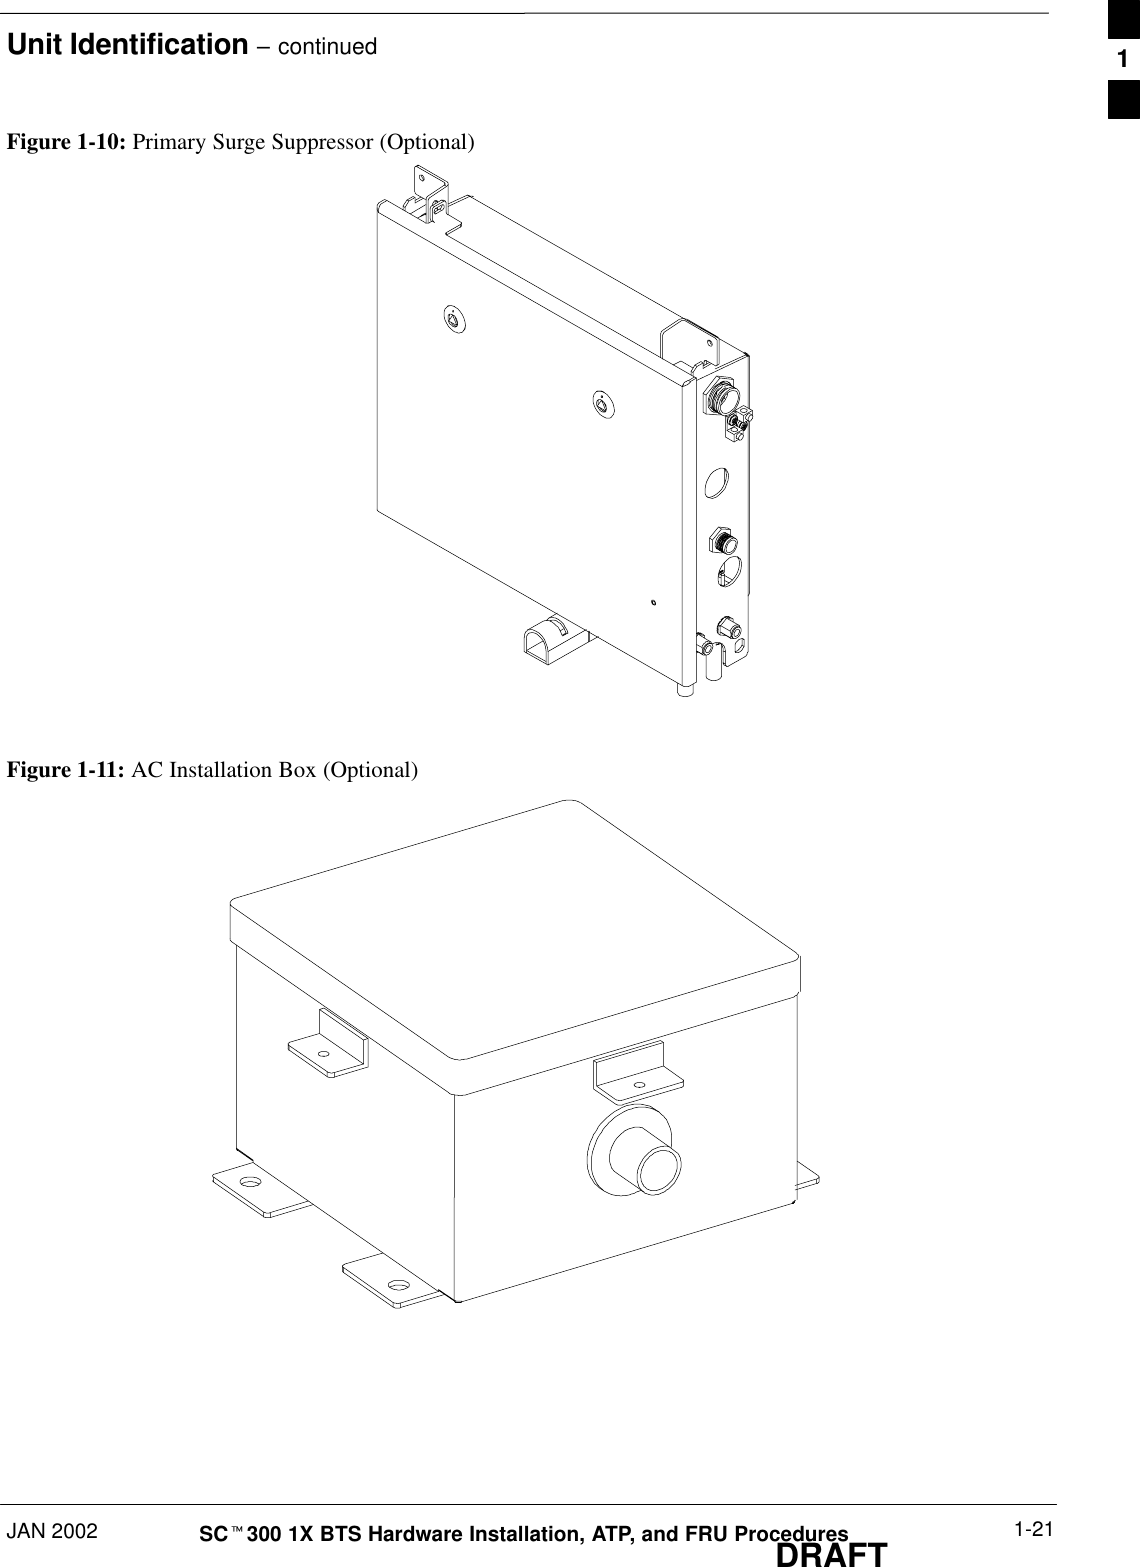 Unit Identification – continuedJAN 2002 1-21SCt300 1X BTS Hardware Installation, ATP, and FRU ProceduresDRAFTFigure 1-10: Primary Surge Suppressor (Optional)Figure 1-11: AC Installation Box (Optional)1